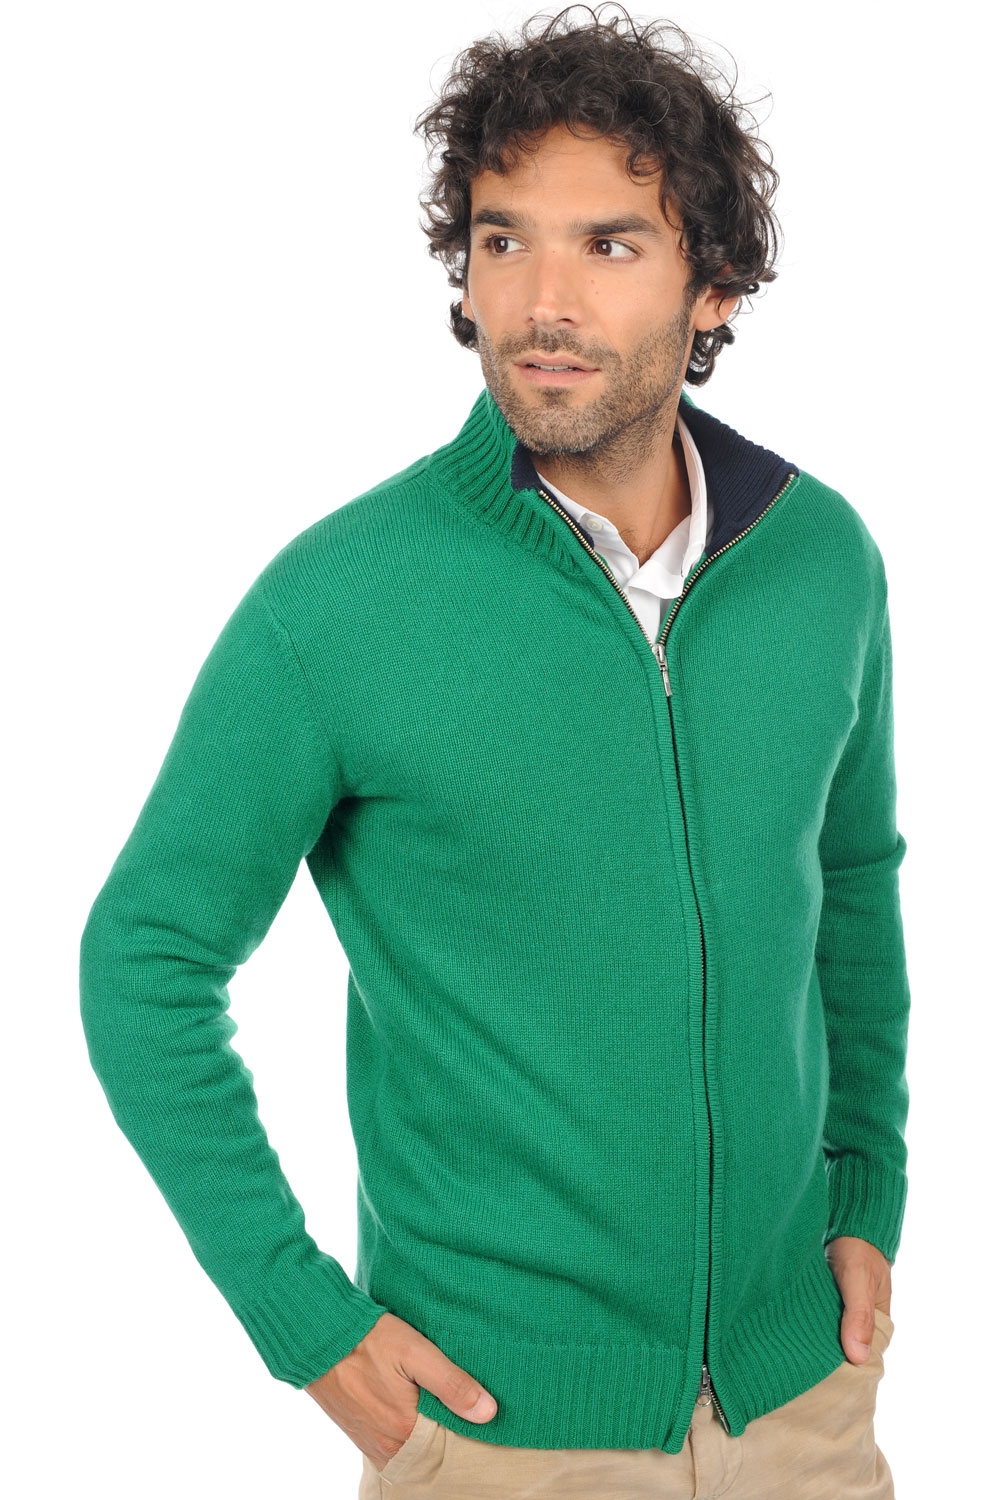 Cashmere men waistcoat sleeveless sweaters maxime evergreen dress blue 2xl